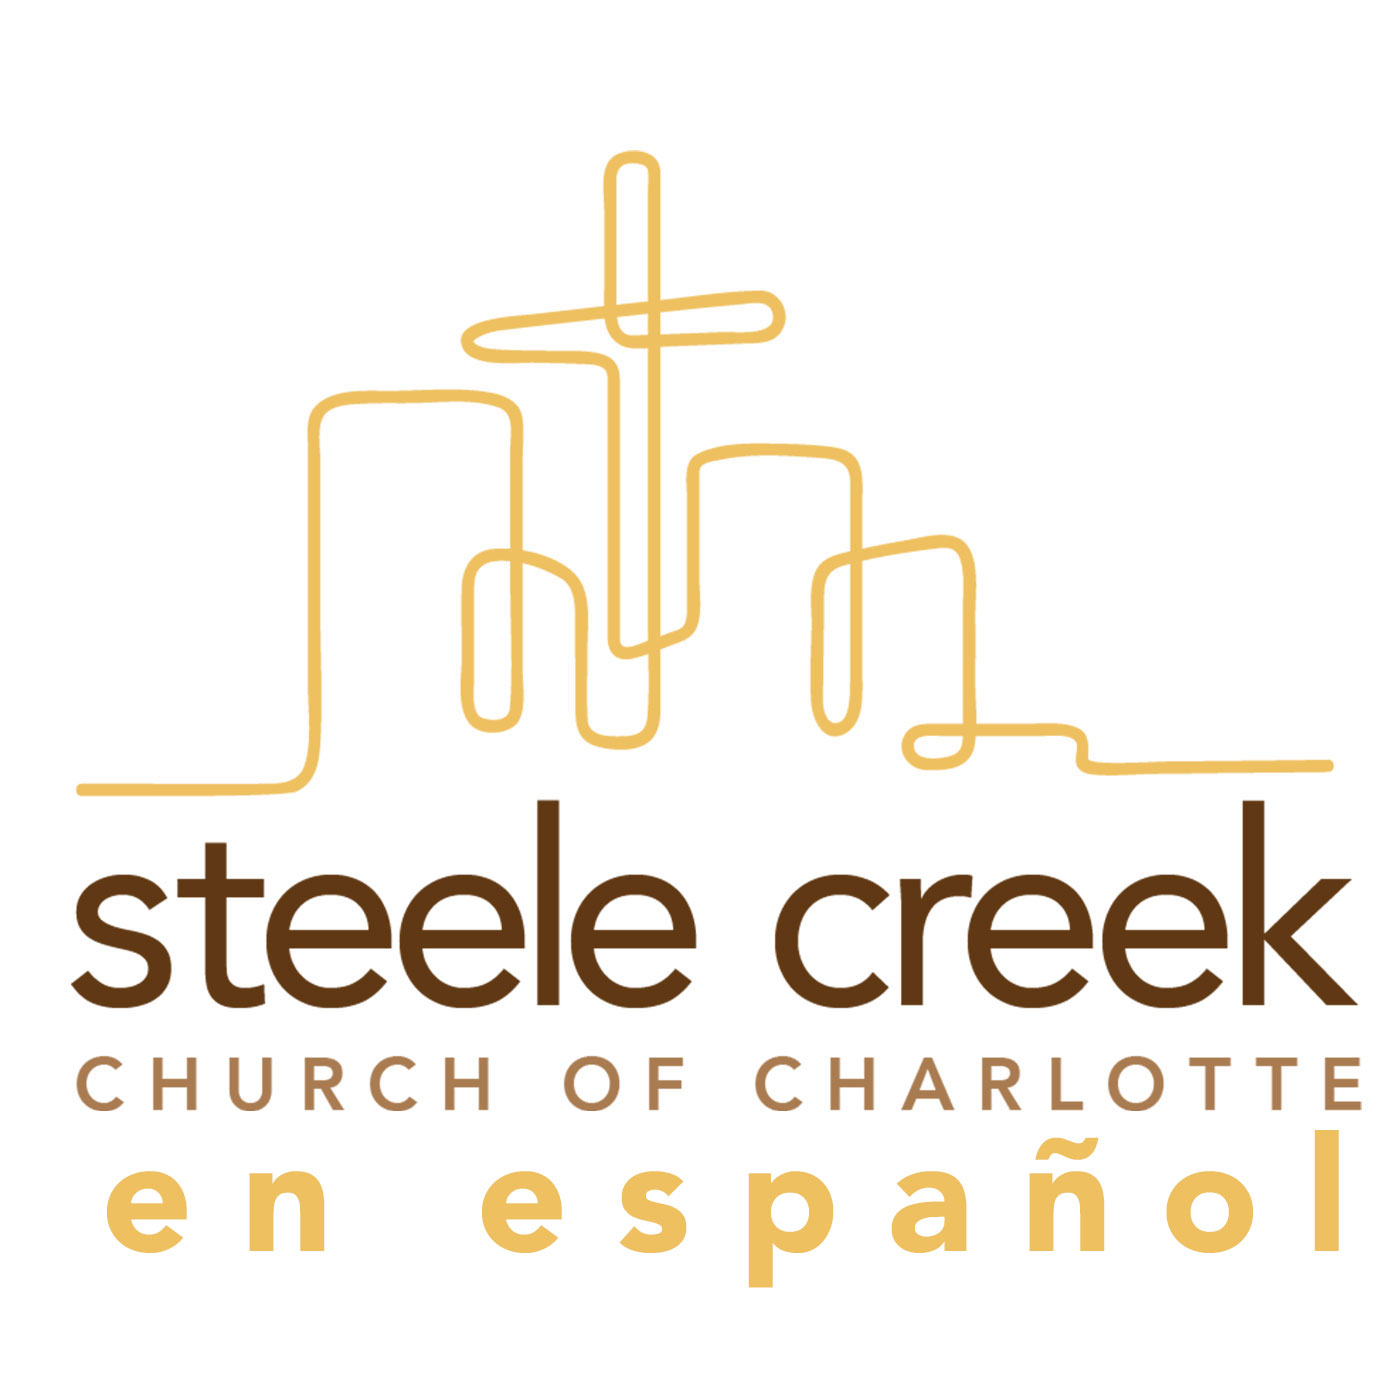 podcasts en español - Steele Creek Church of Charlotte